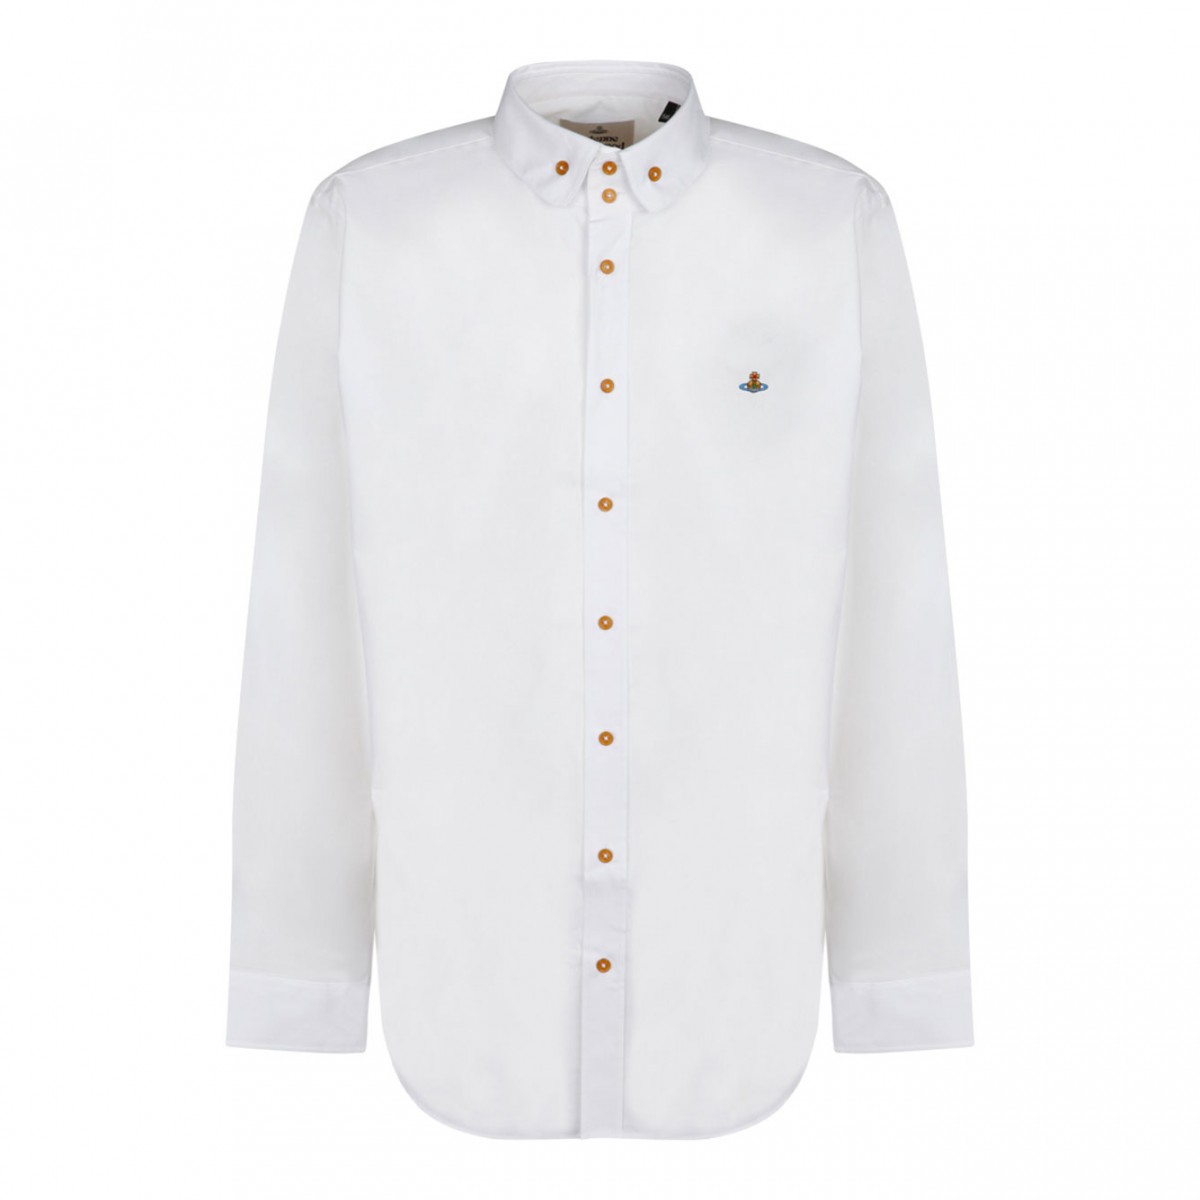 Two Button Krall White Shirt